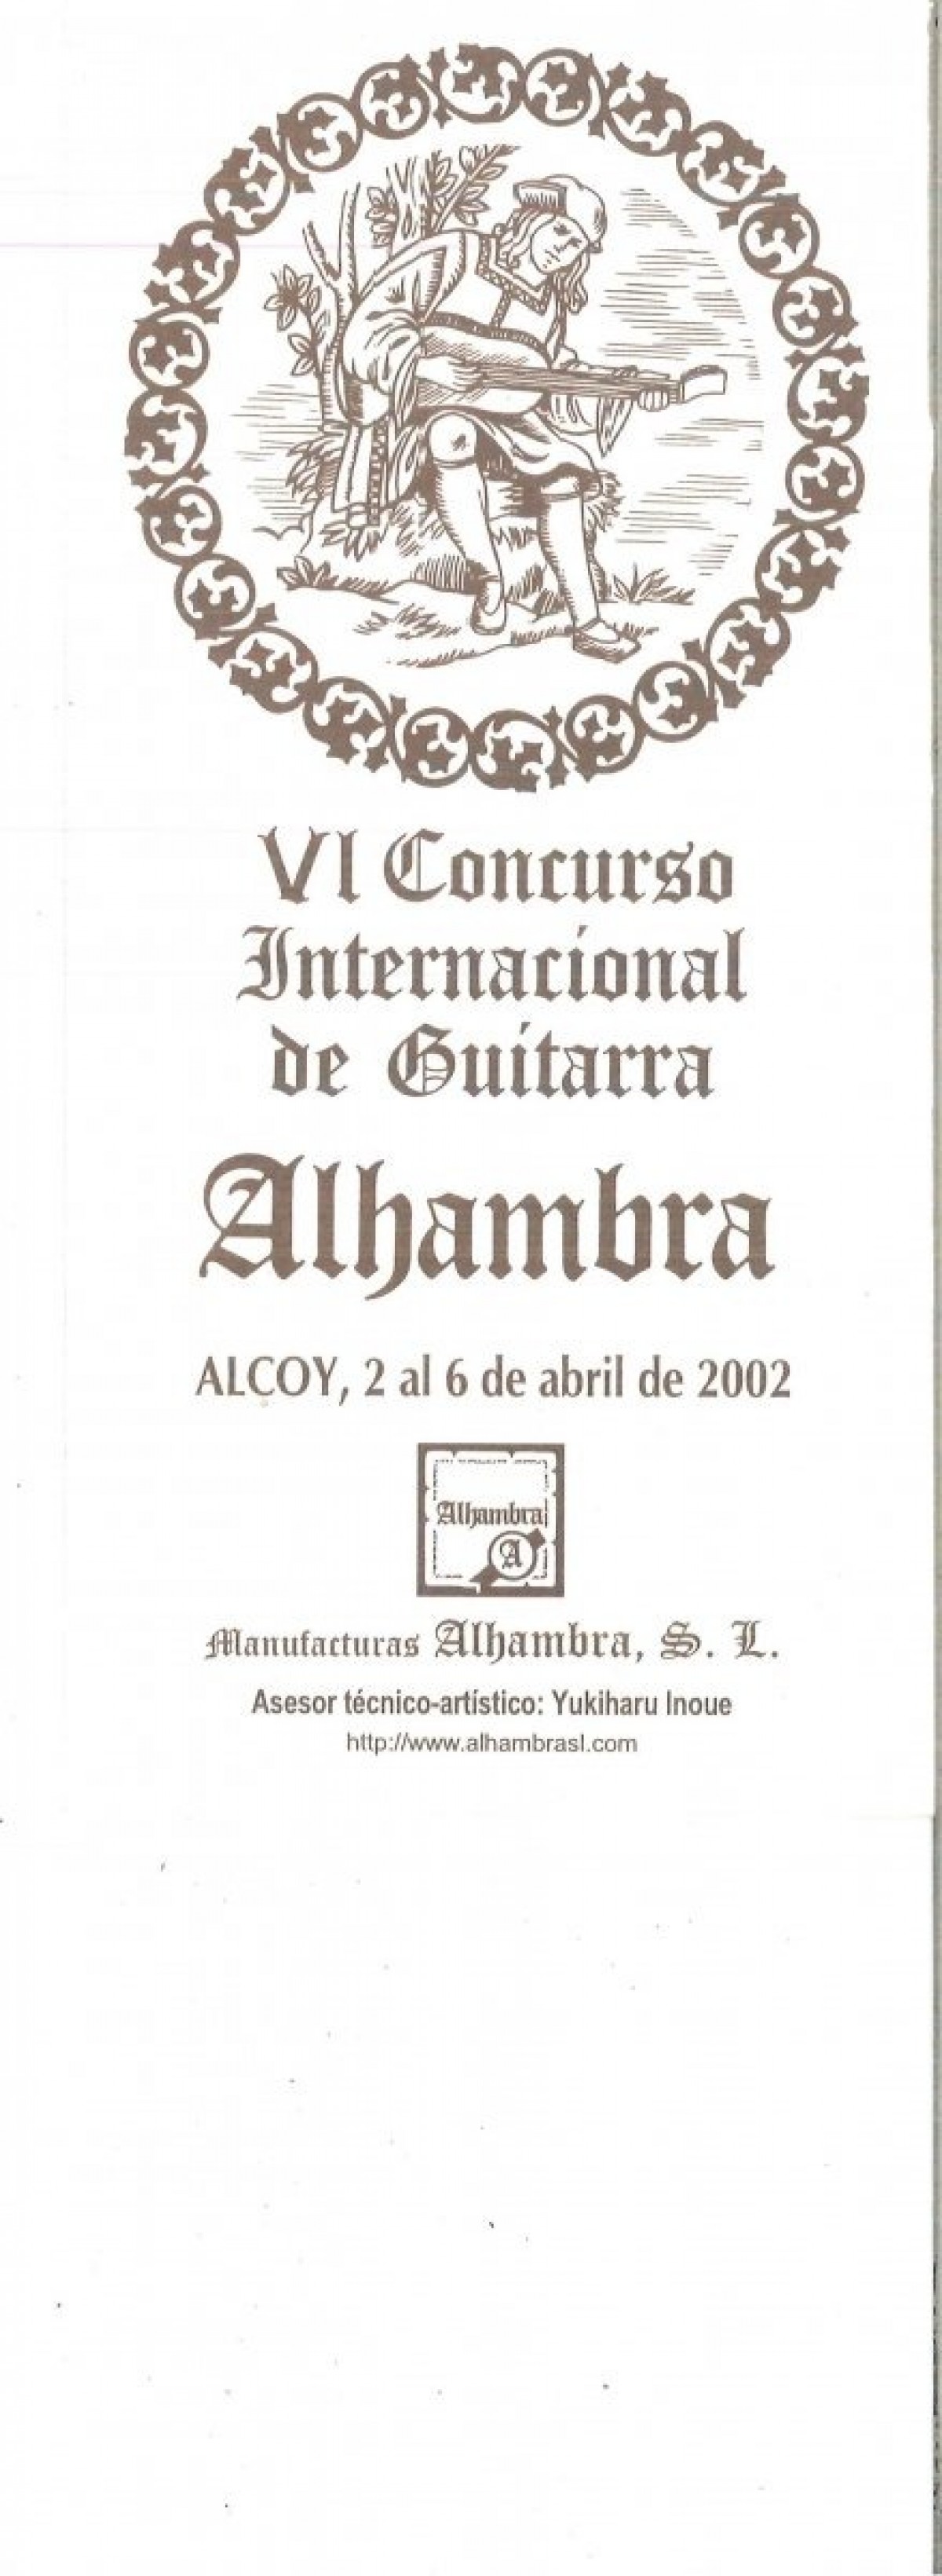 CIGA 2002